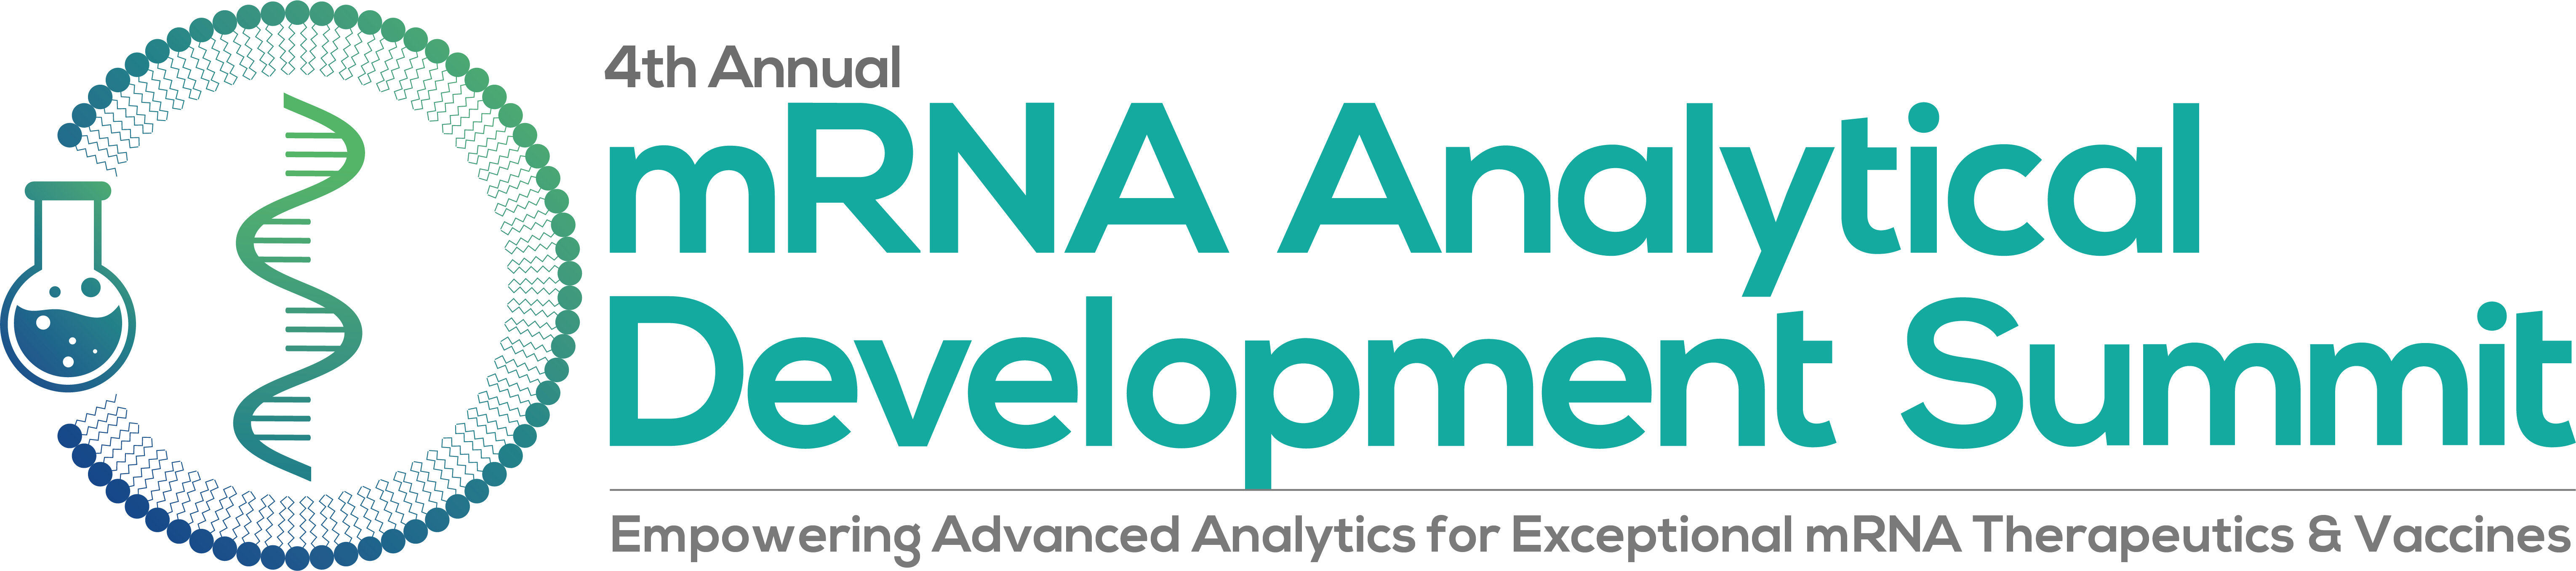 4th mRNA Analytical Development Summit US logo